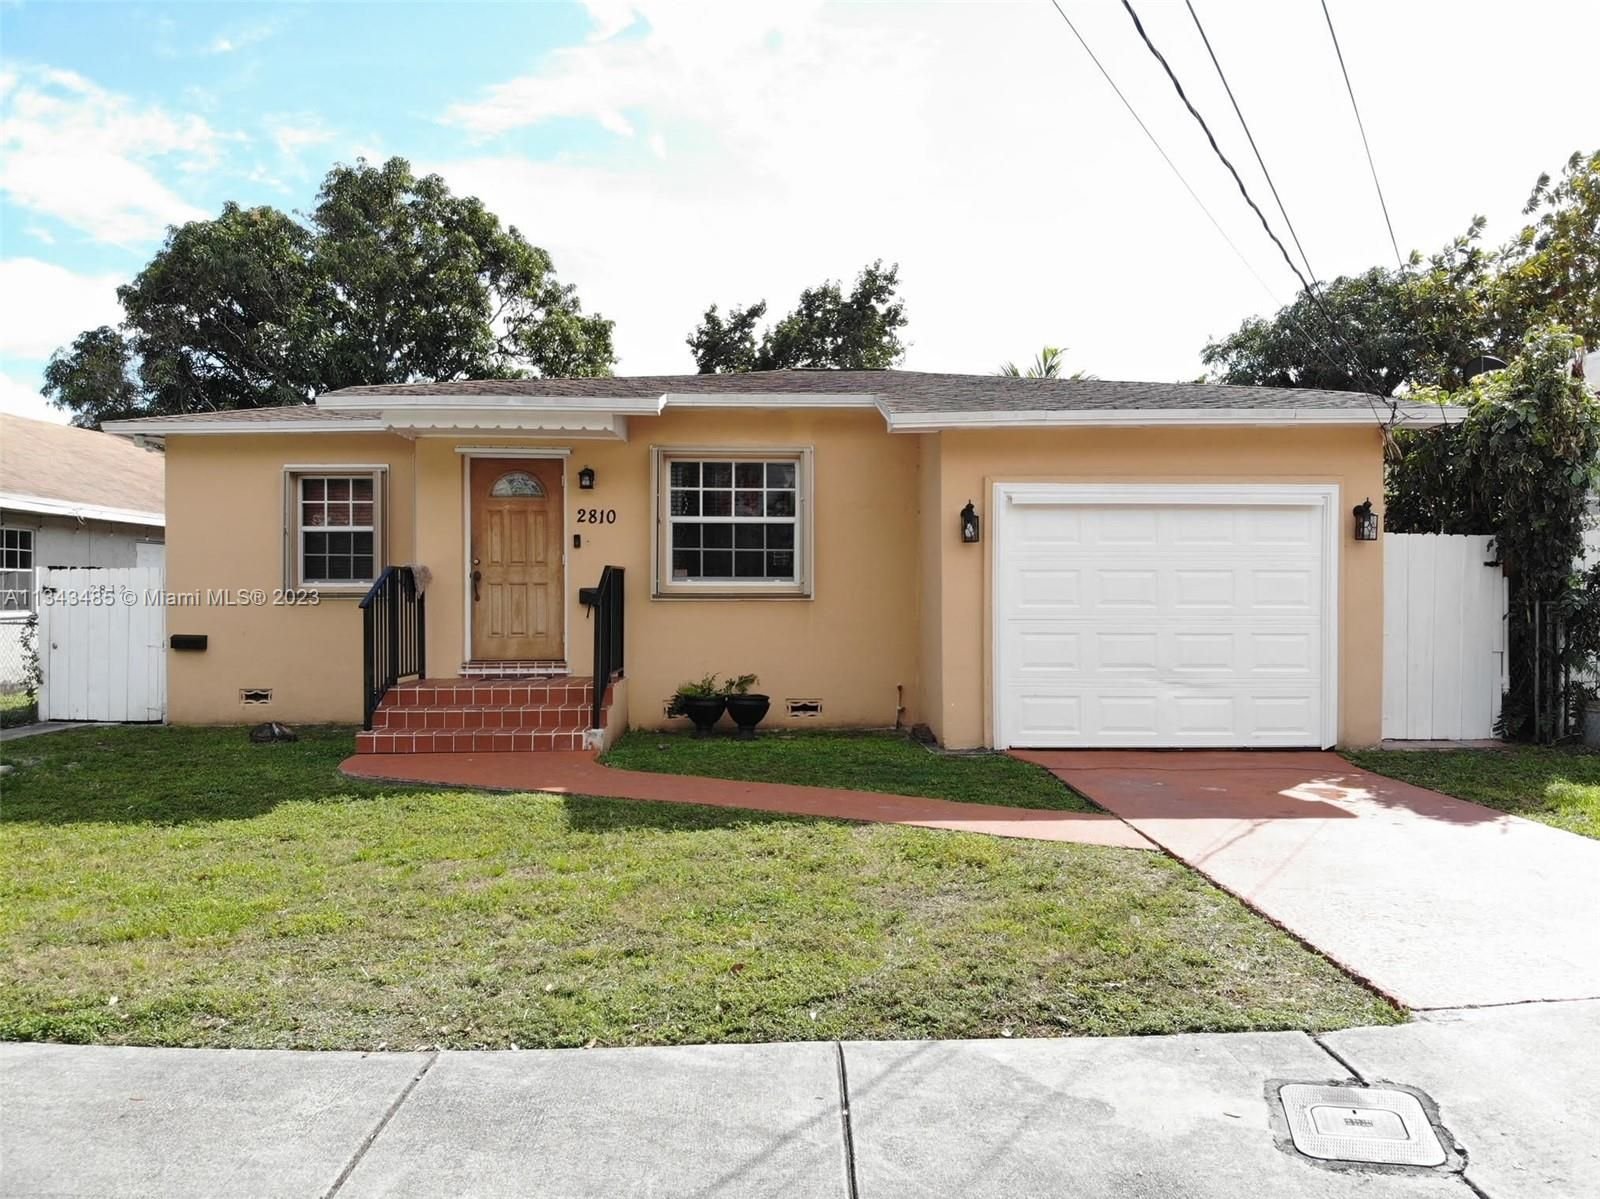 Real estate property located at 2810 16th Ter, Miami-Dade County, GRAPELAND, Miami, FL